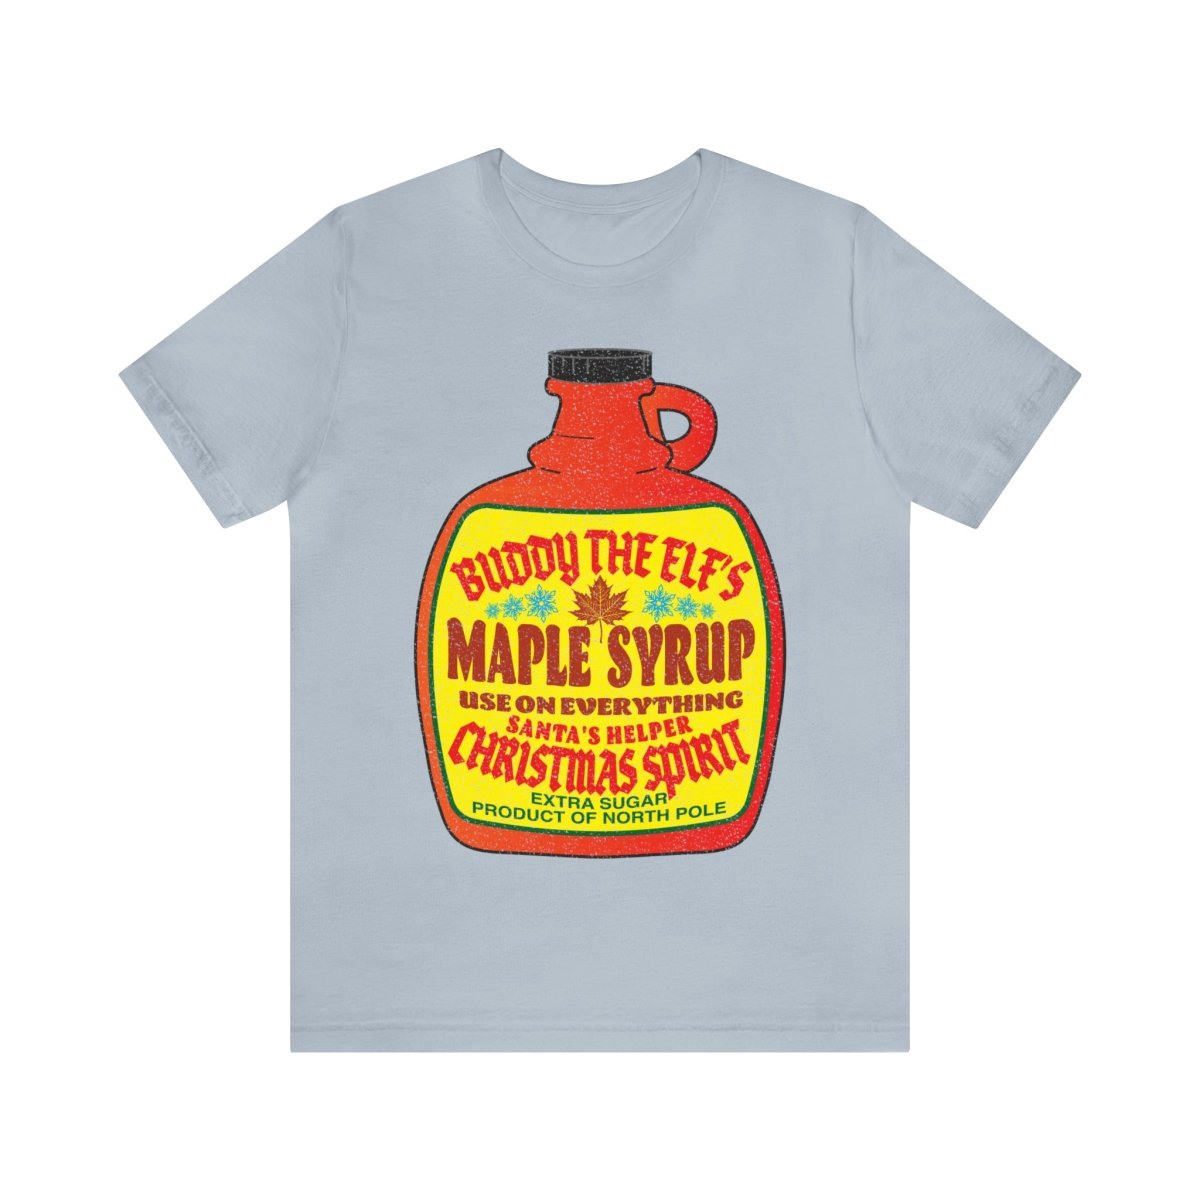 Buddy's Maple Syrup Premium T-Shirt, Christmas Spirit, Extra Sugar, Santa's Helper, Elf Made in North Pole